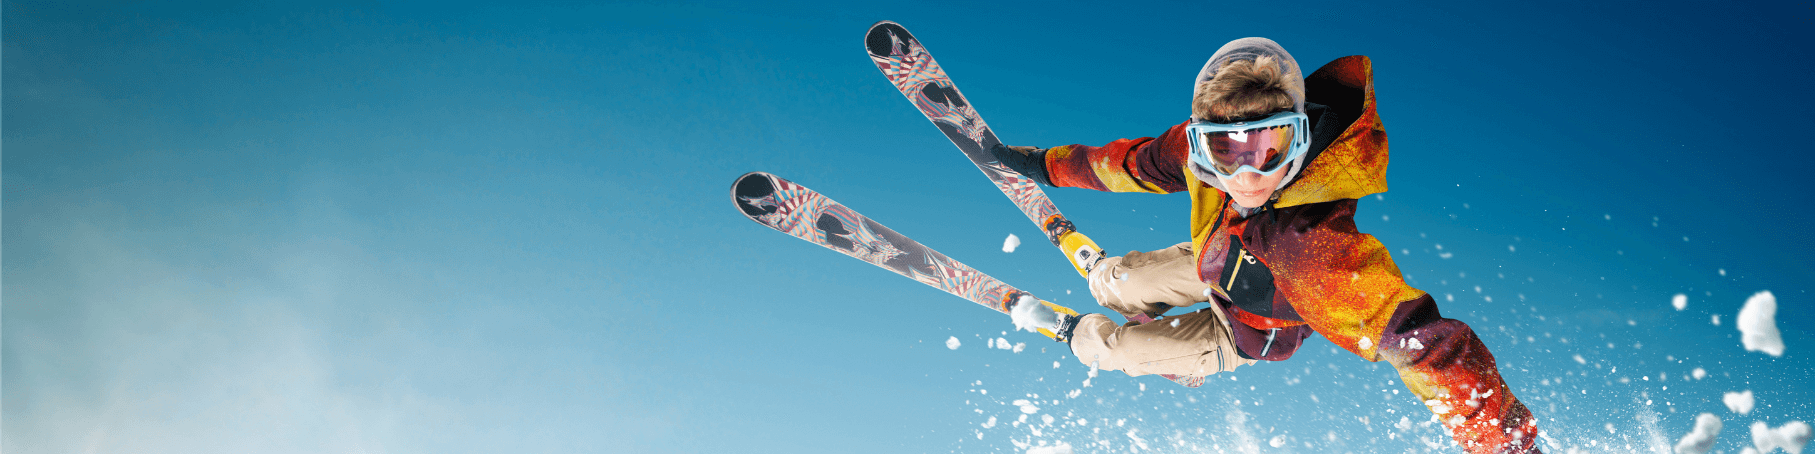 skijanje_najbolji_dodaci_prehrani_sportski_vodič_gaz_nutrition